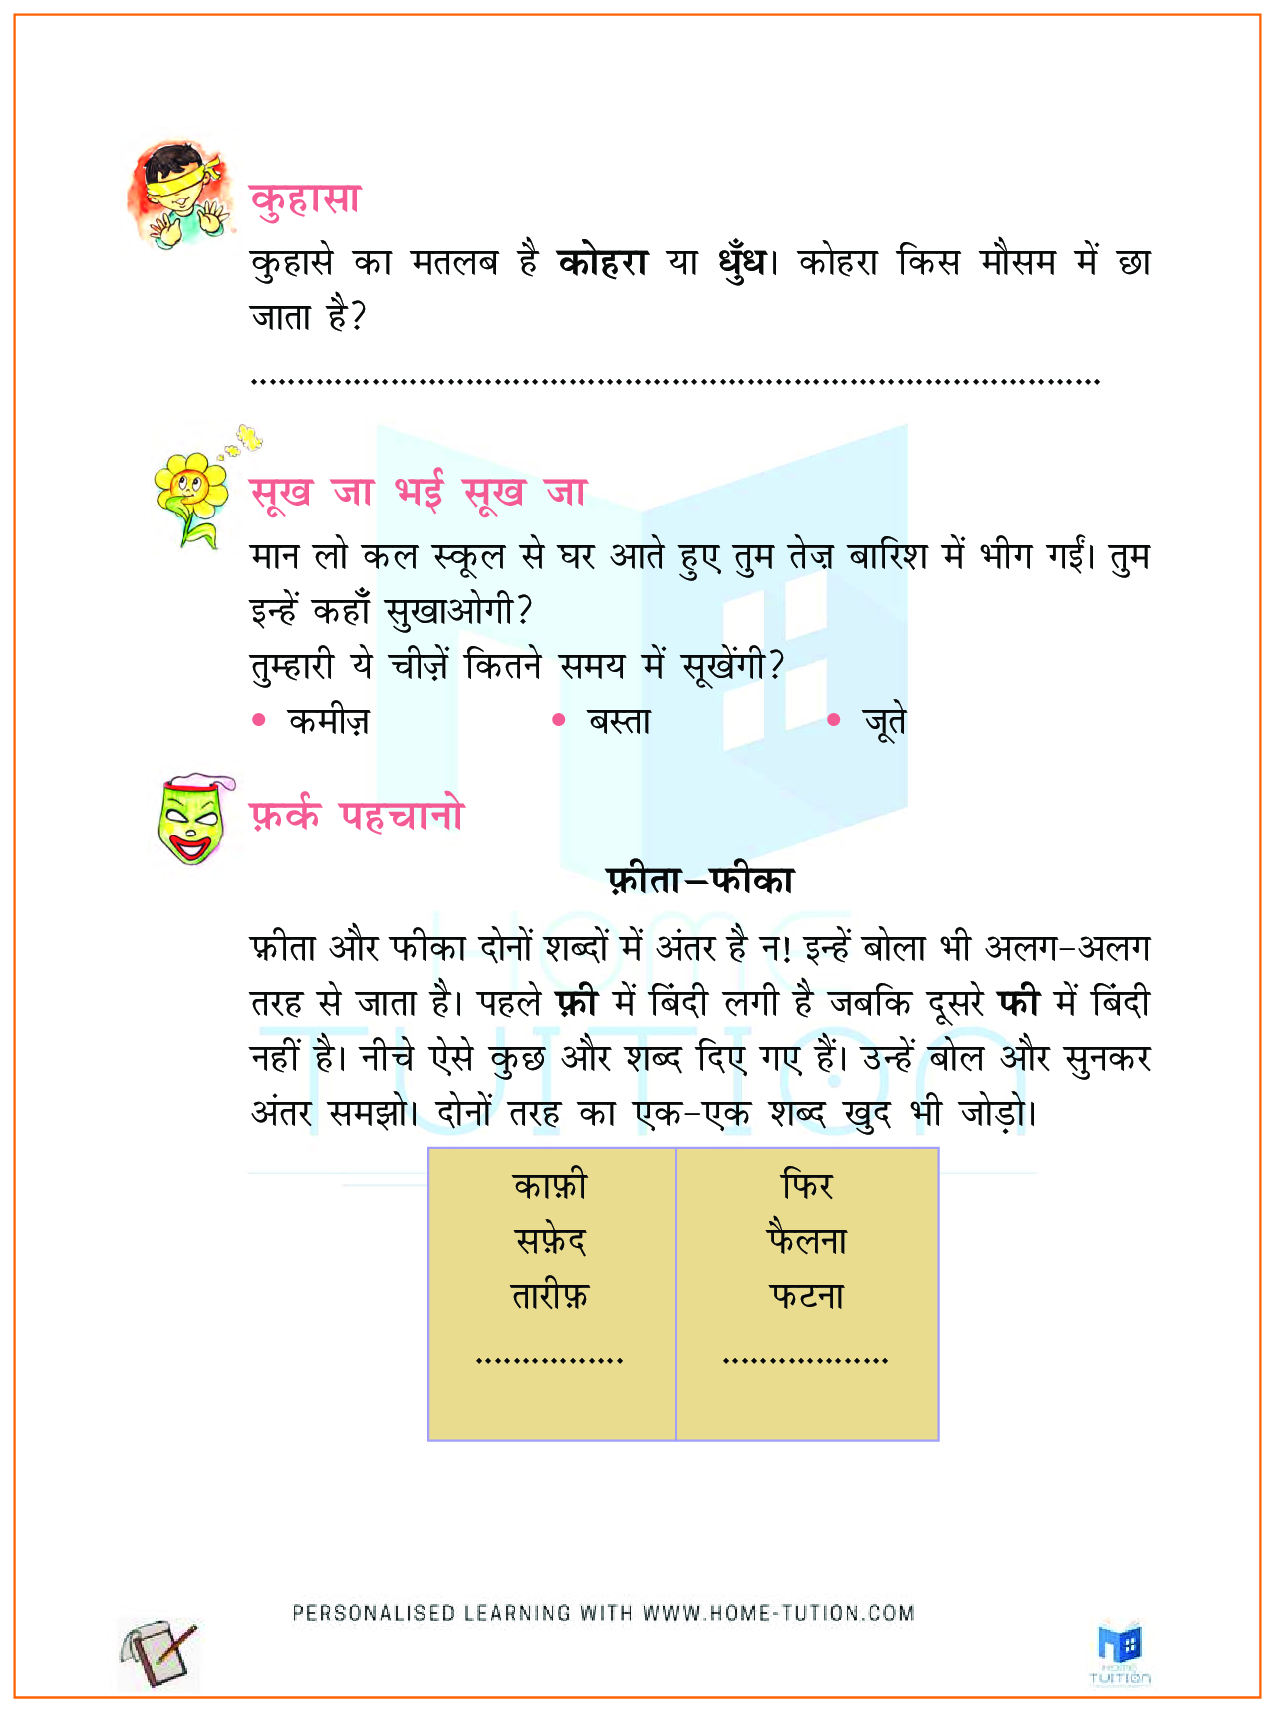 NCERT Solutions for Class 2 Hindi सूरज जल्दी आना जी